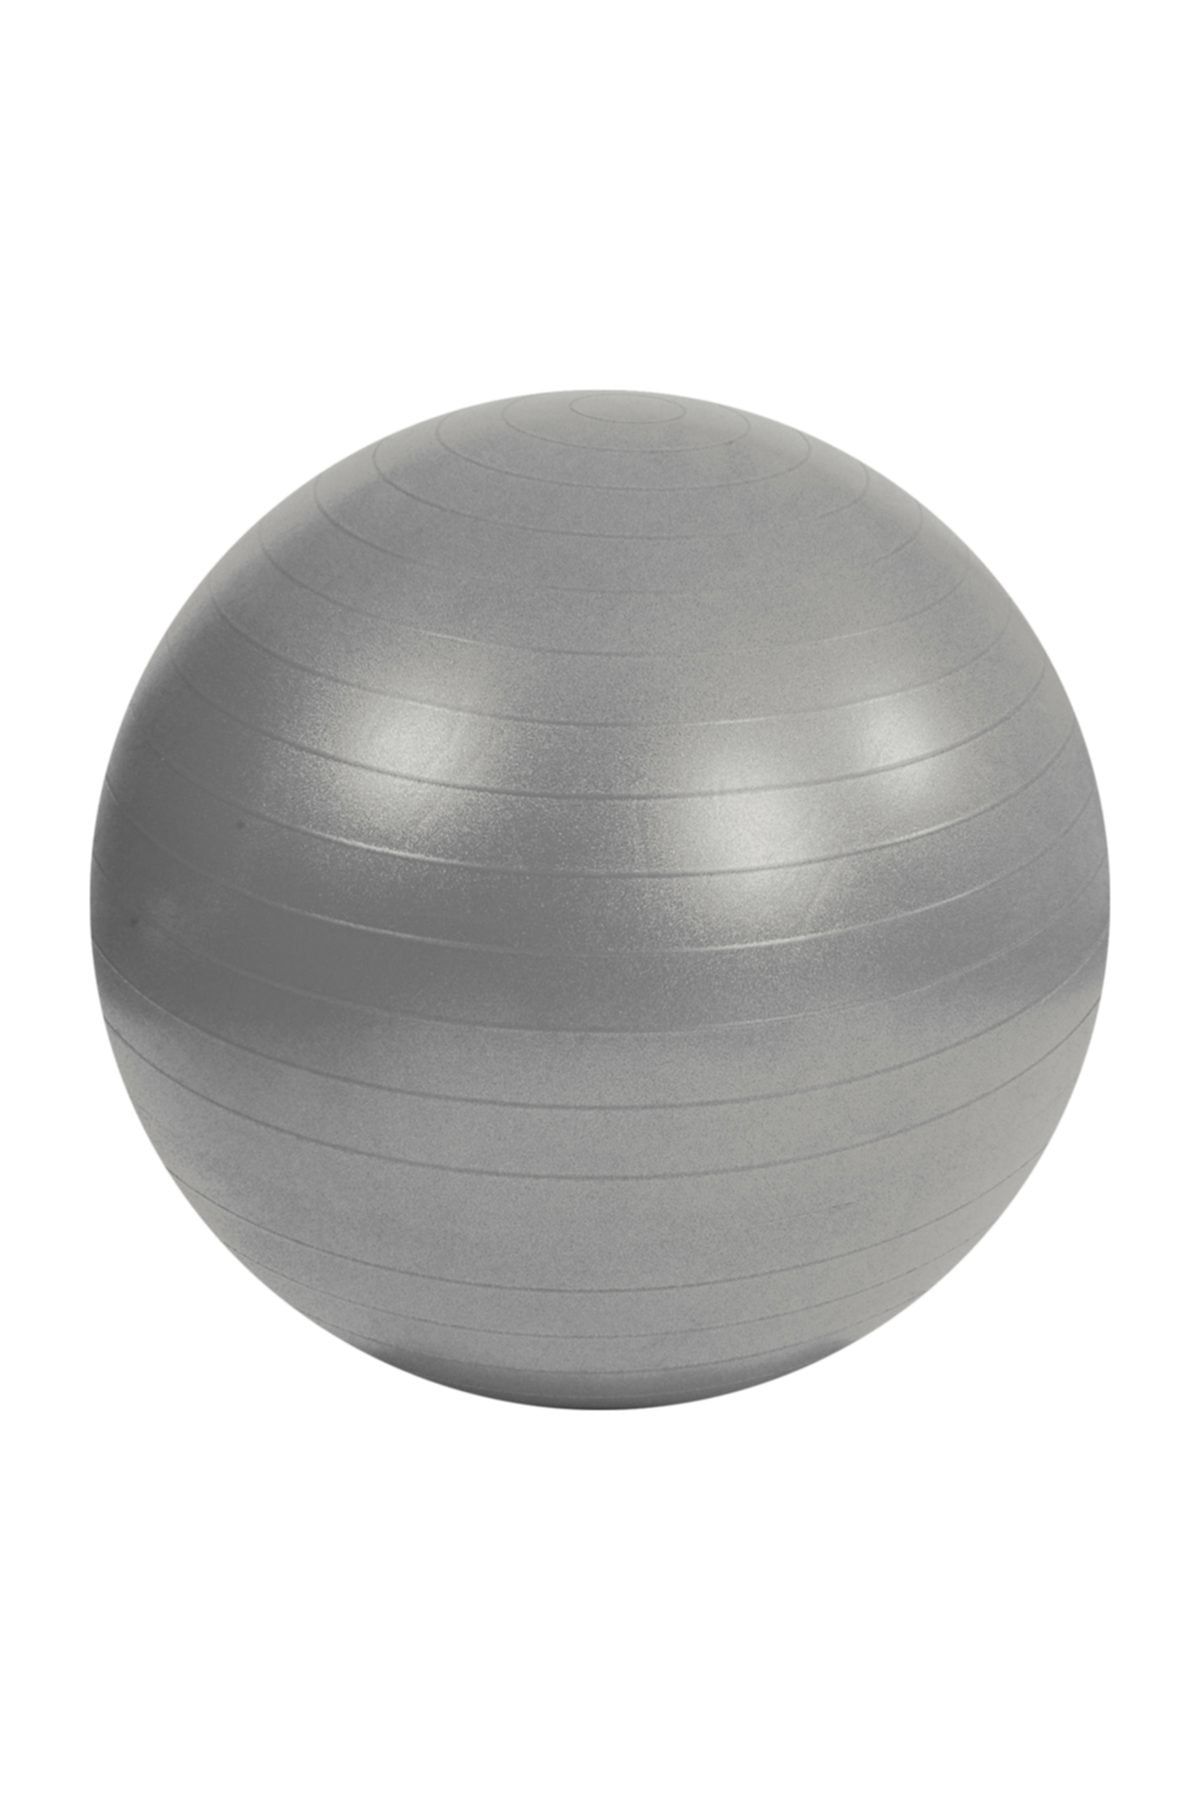 Mambo Mambo Max Abs Gymball - Pilates Topu 95cm- Gümüş